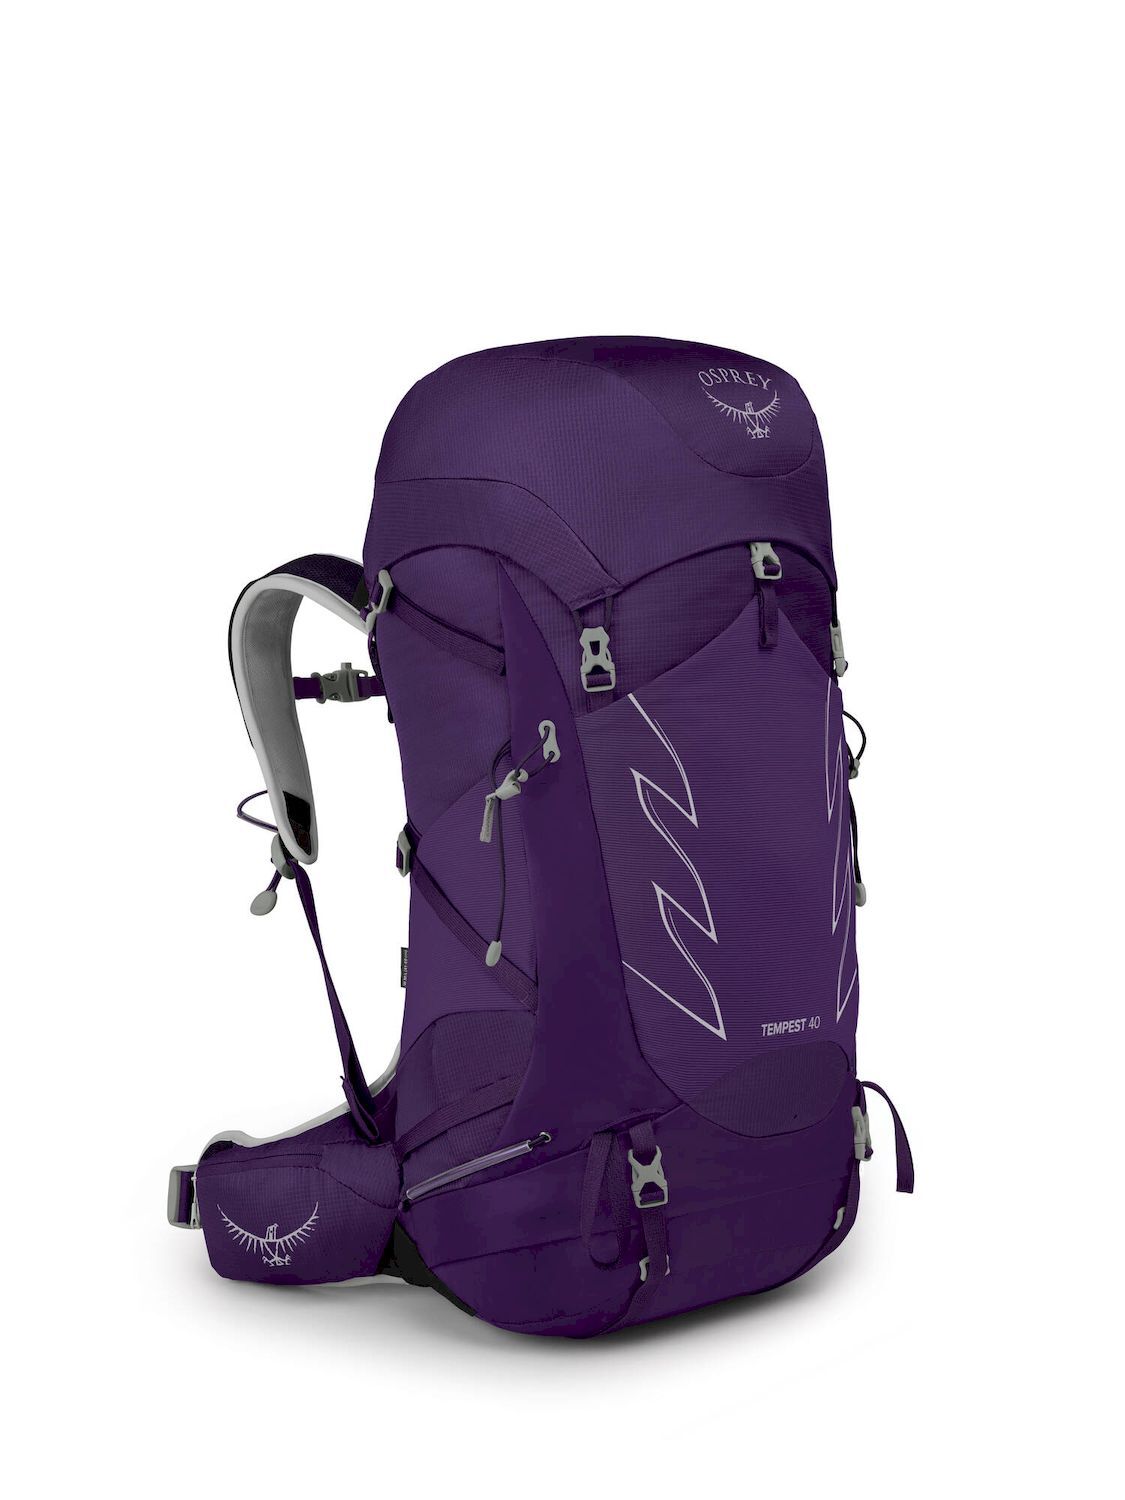 Osprey Tempest 40 - Walking backpack - Women's